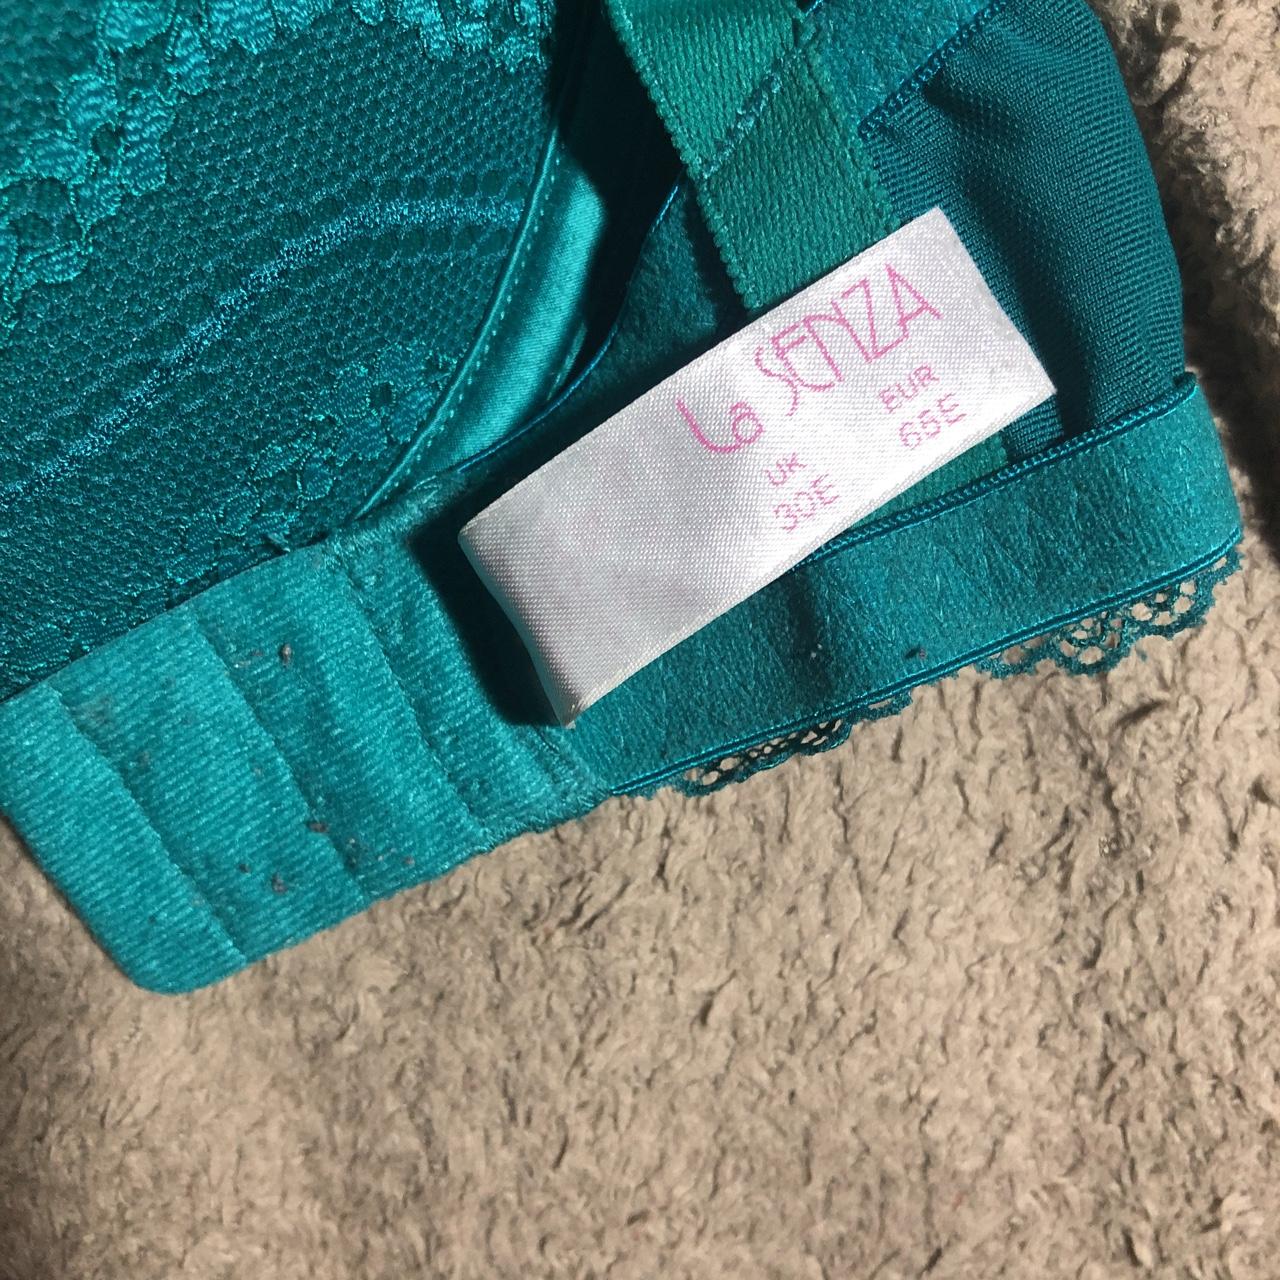 La Senza teal green/blue lace bra in 30E Good condition - Depop